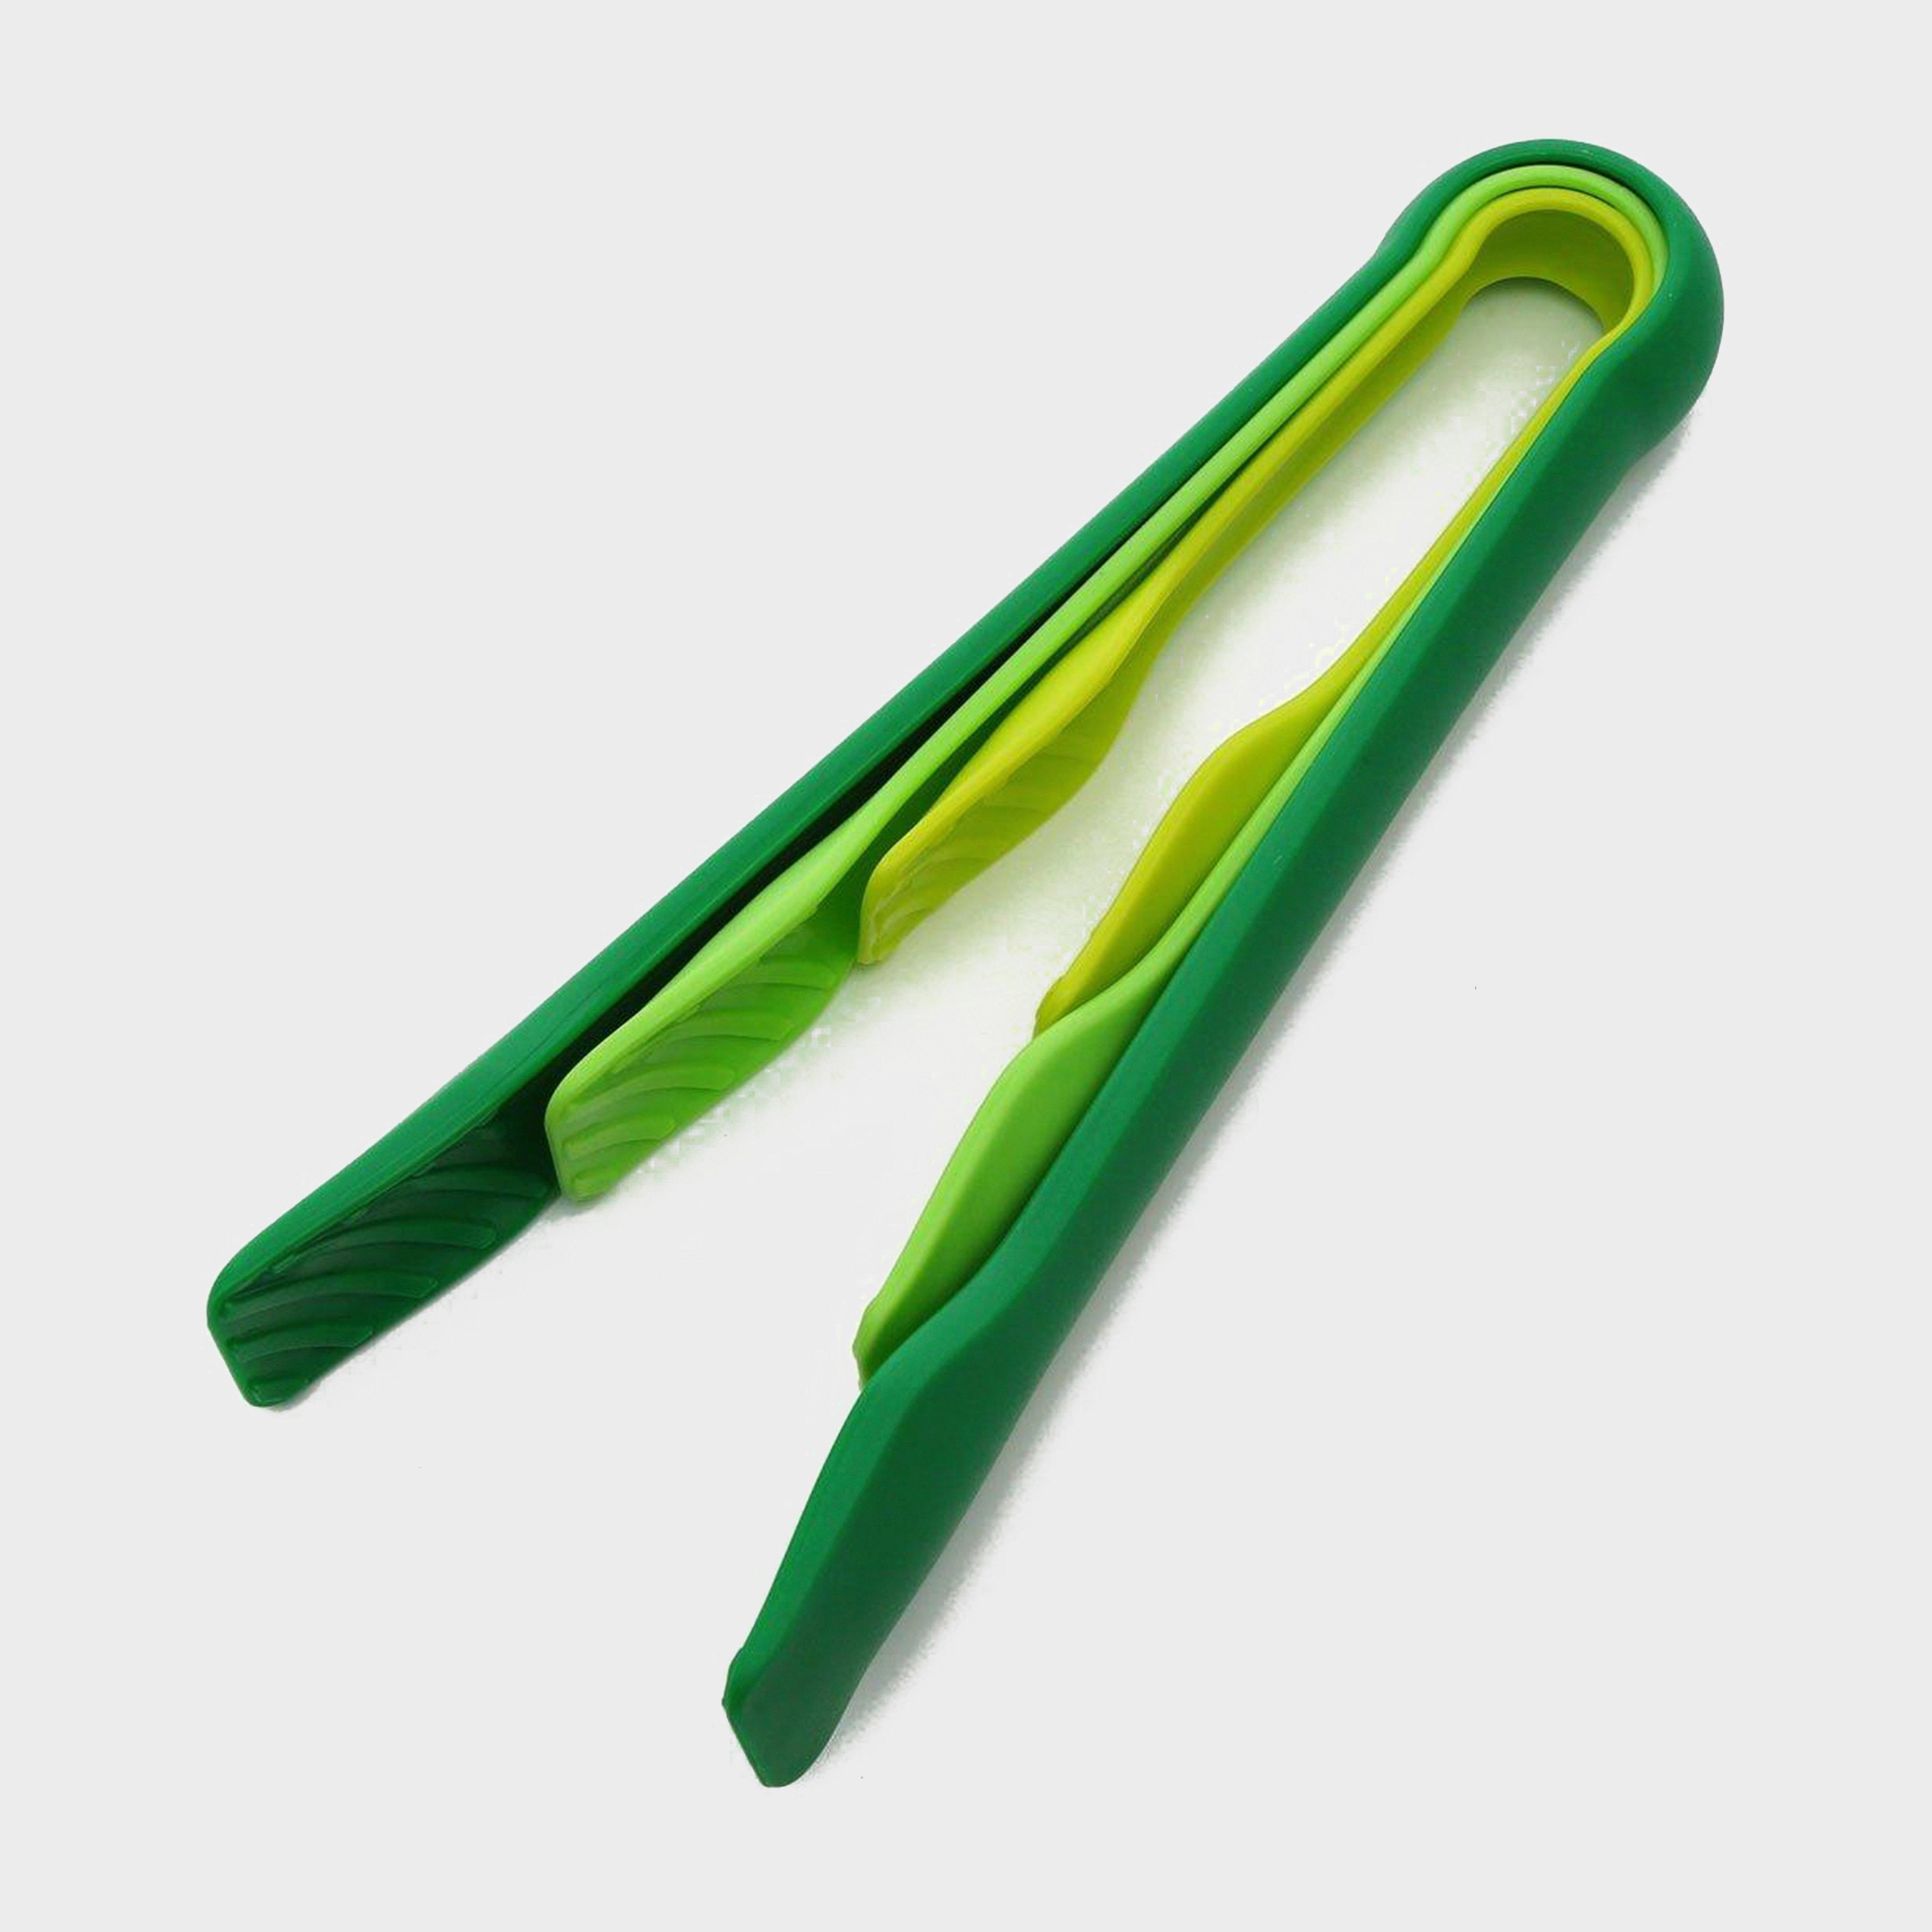 3-Piece Nylon Tongs Set - Green, Green